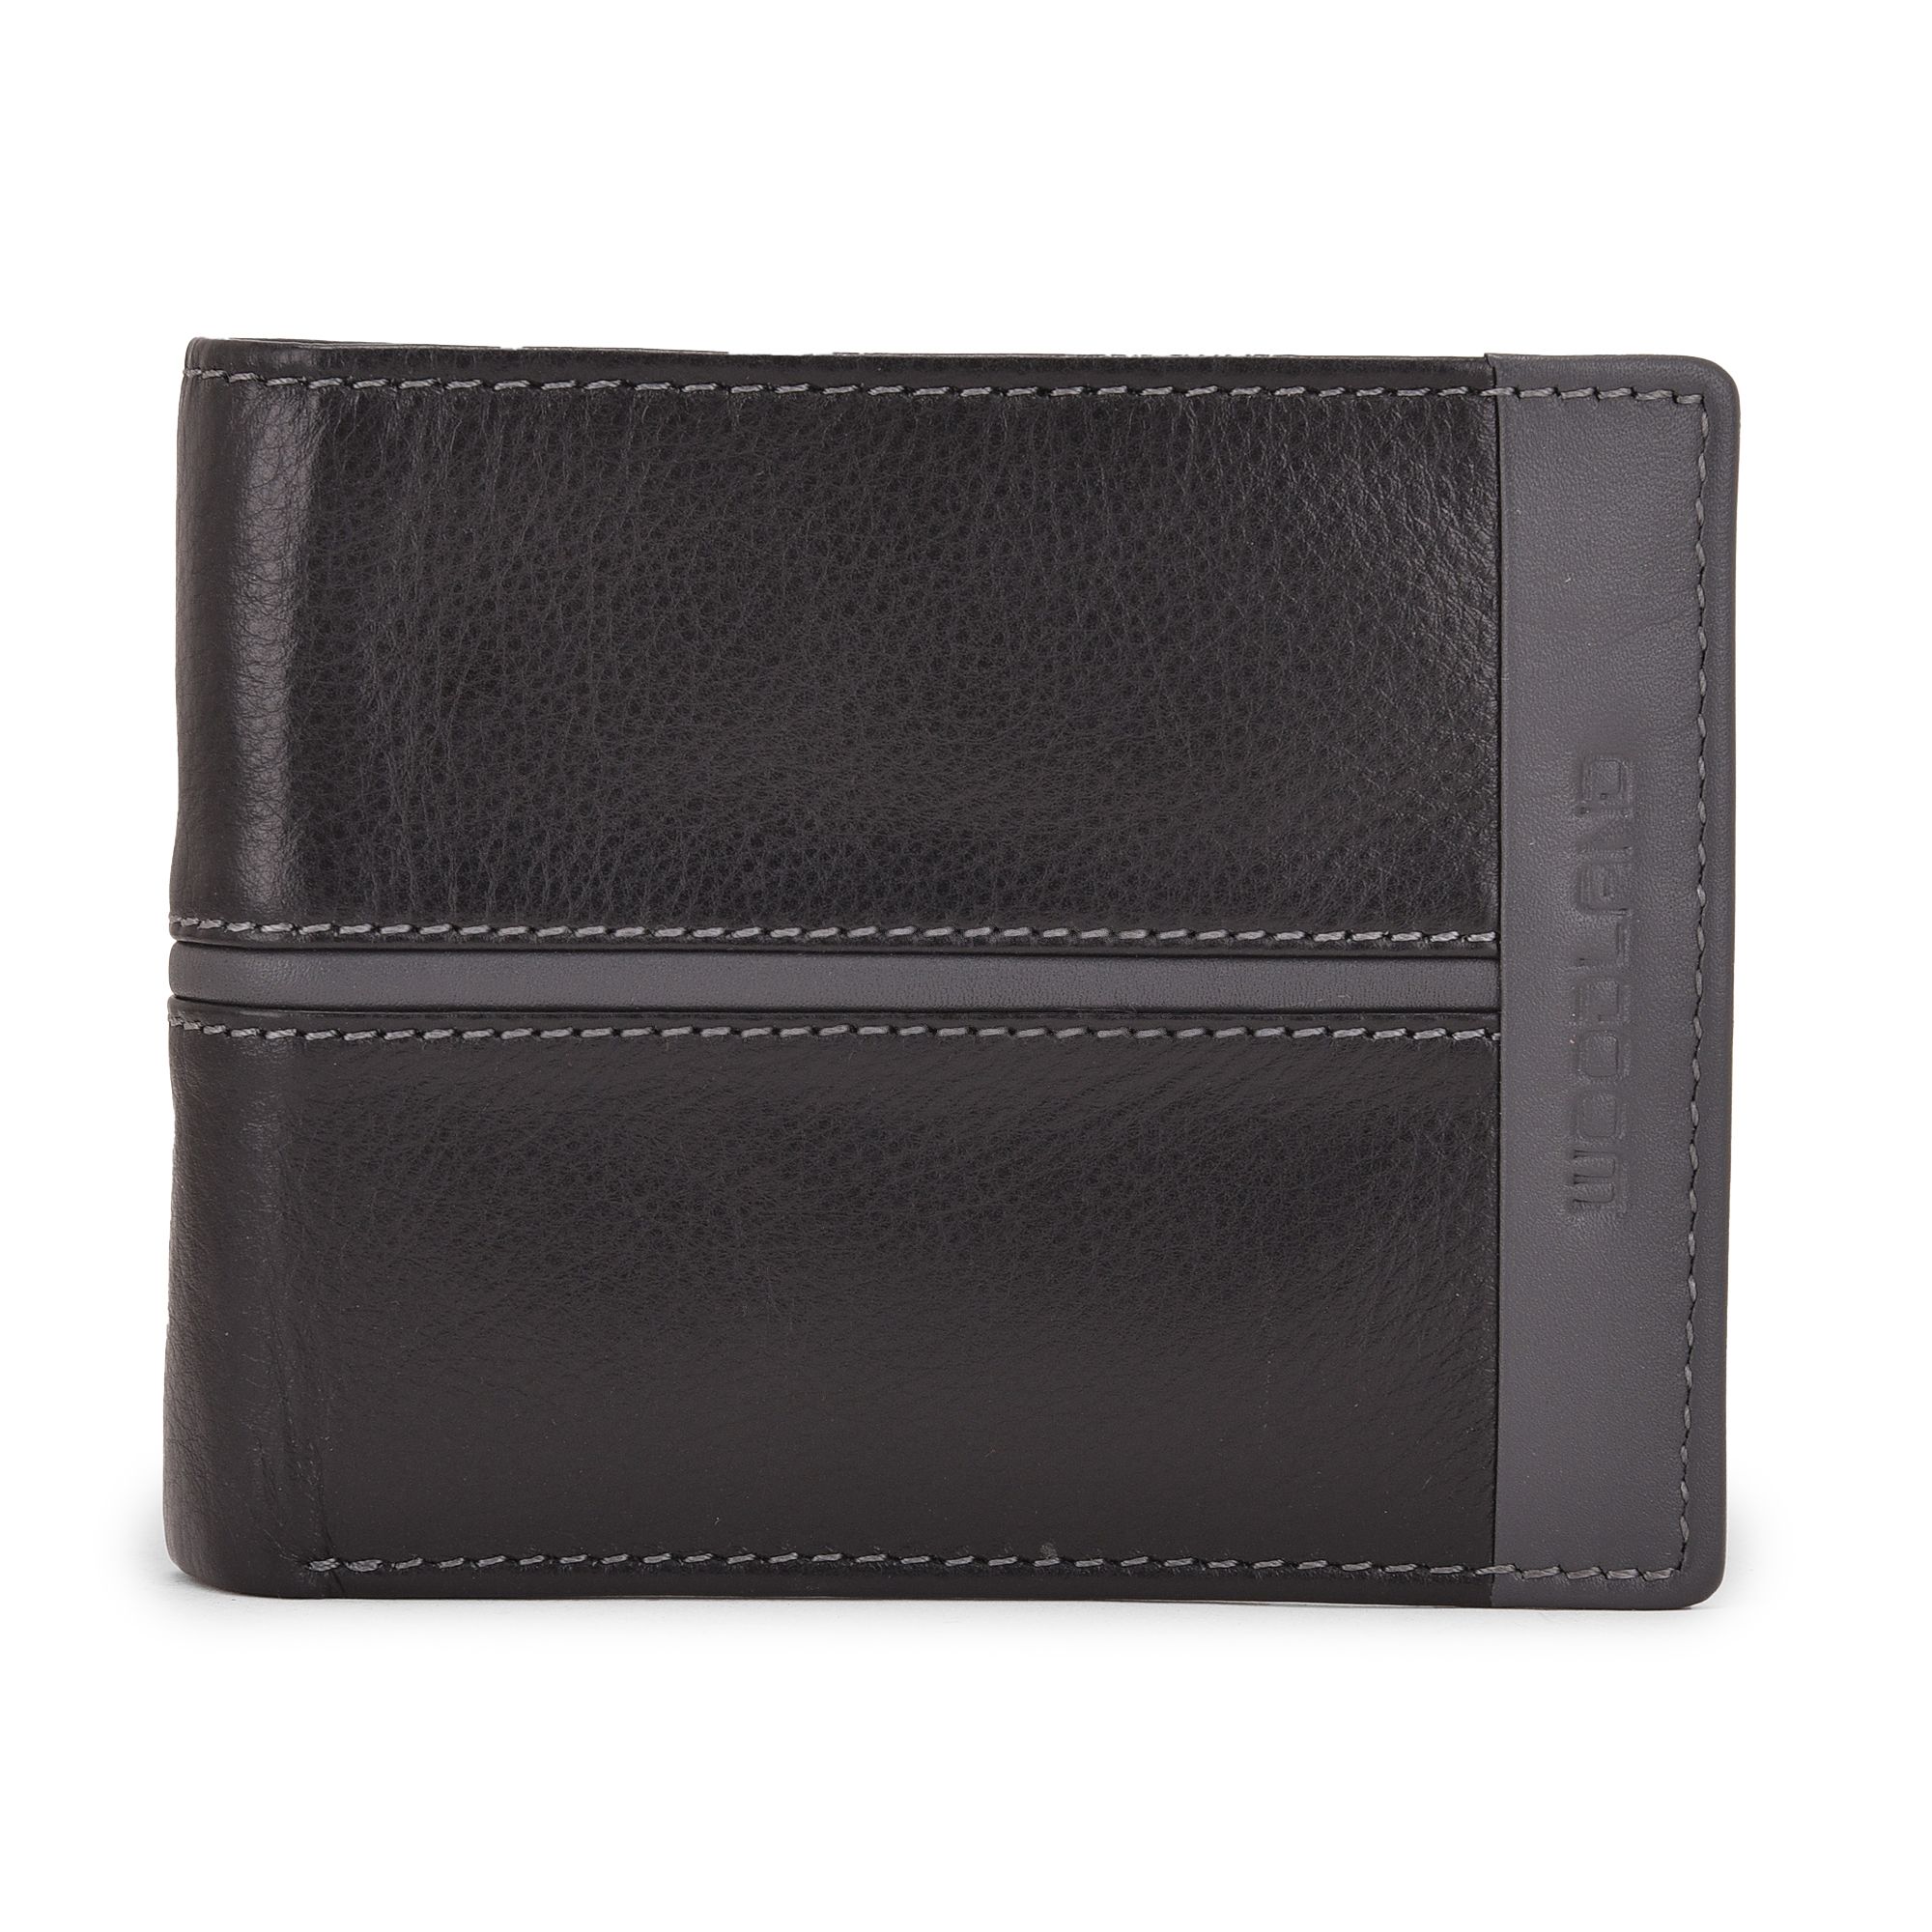 Black/ grey bi-fold wallet